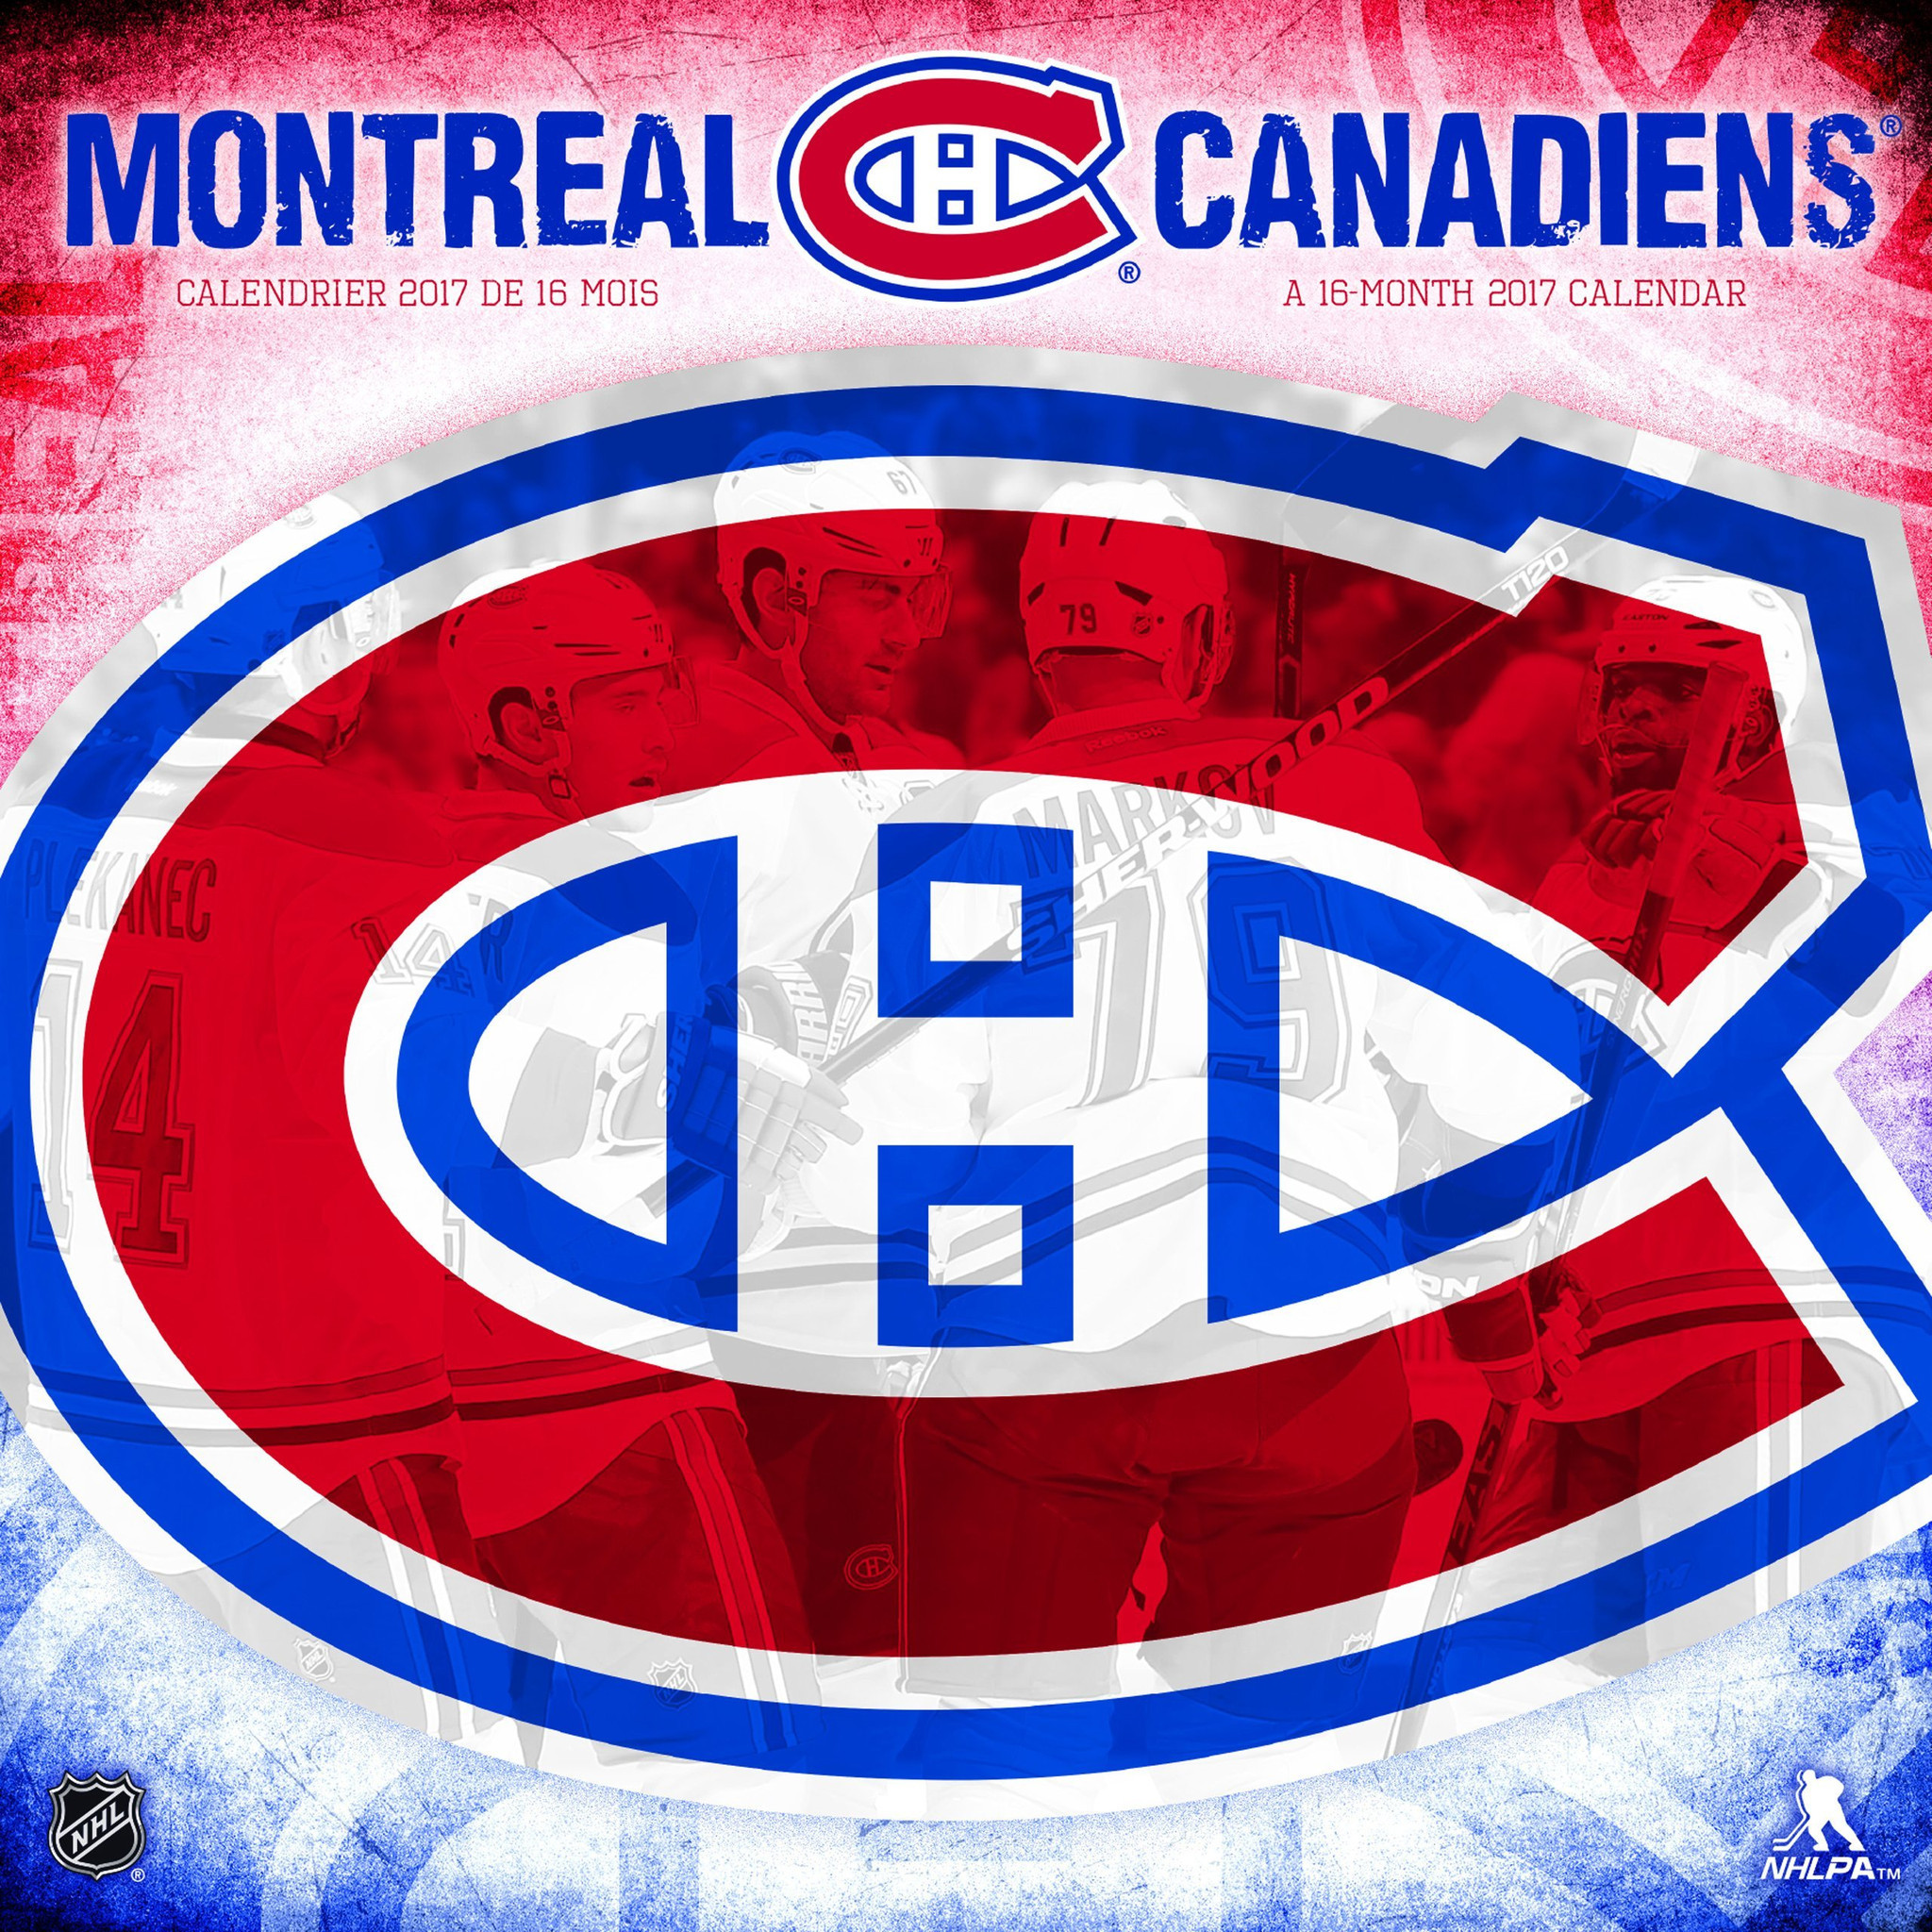 Montreal Canadiens Wallpaper Image